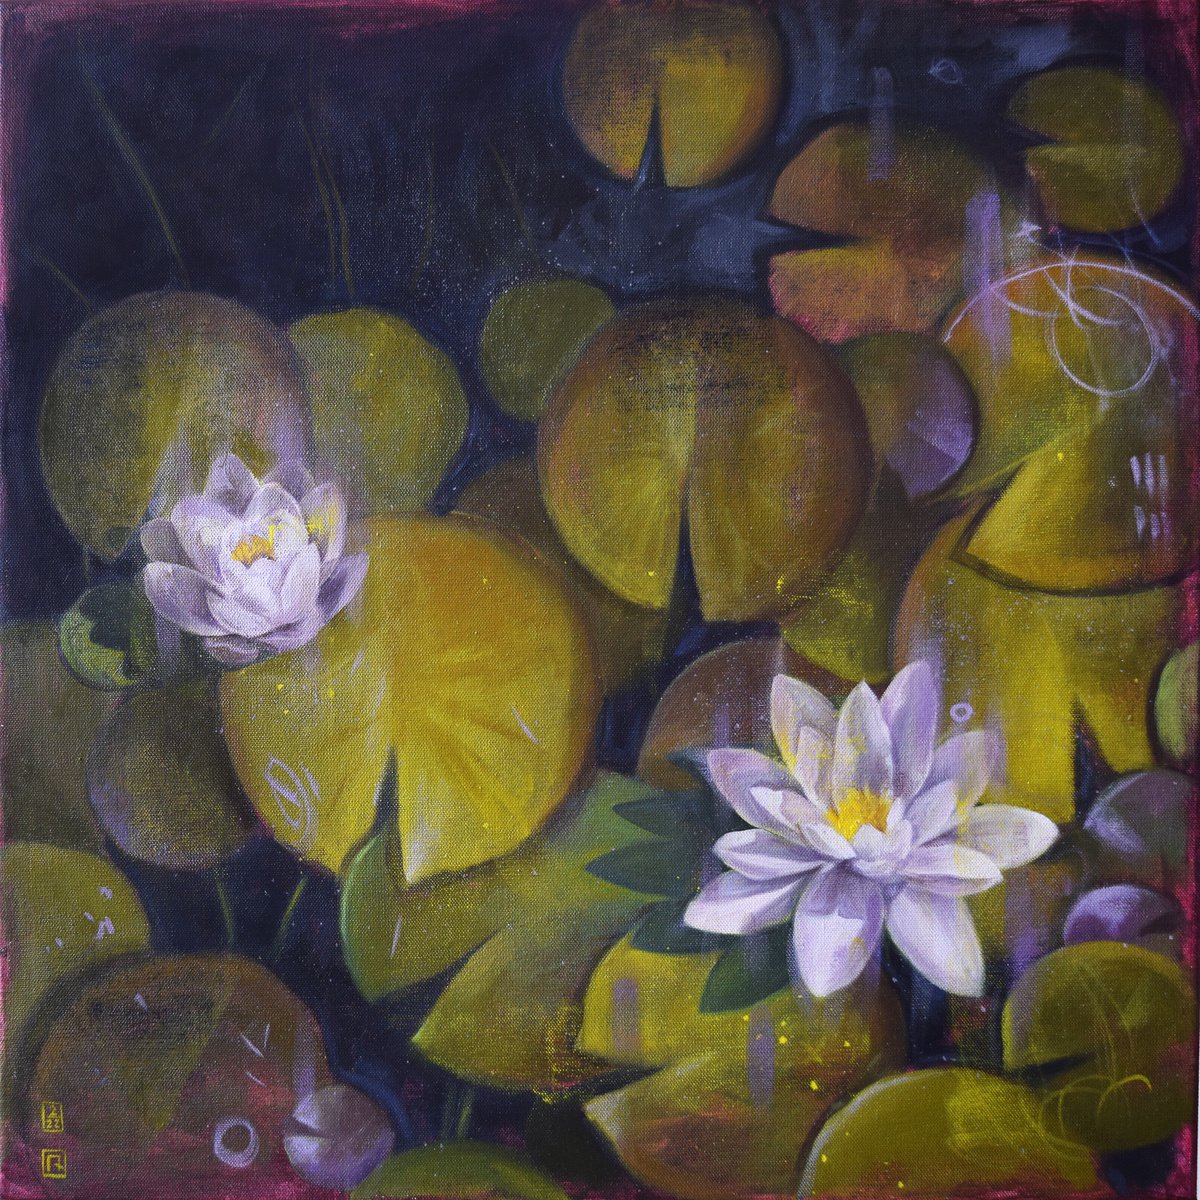 Water lilies by Polina Kharlamova